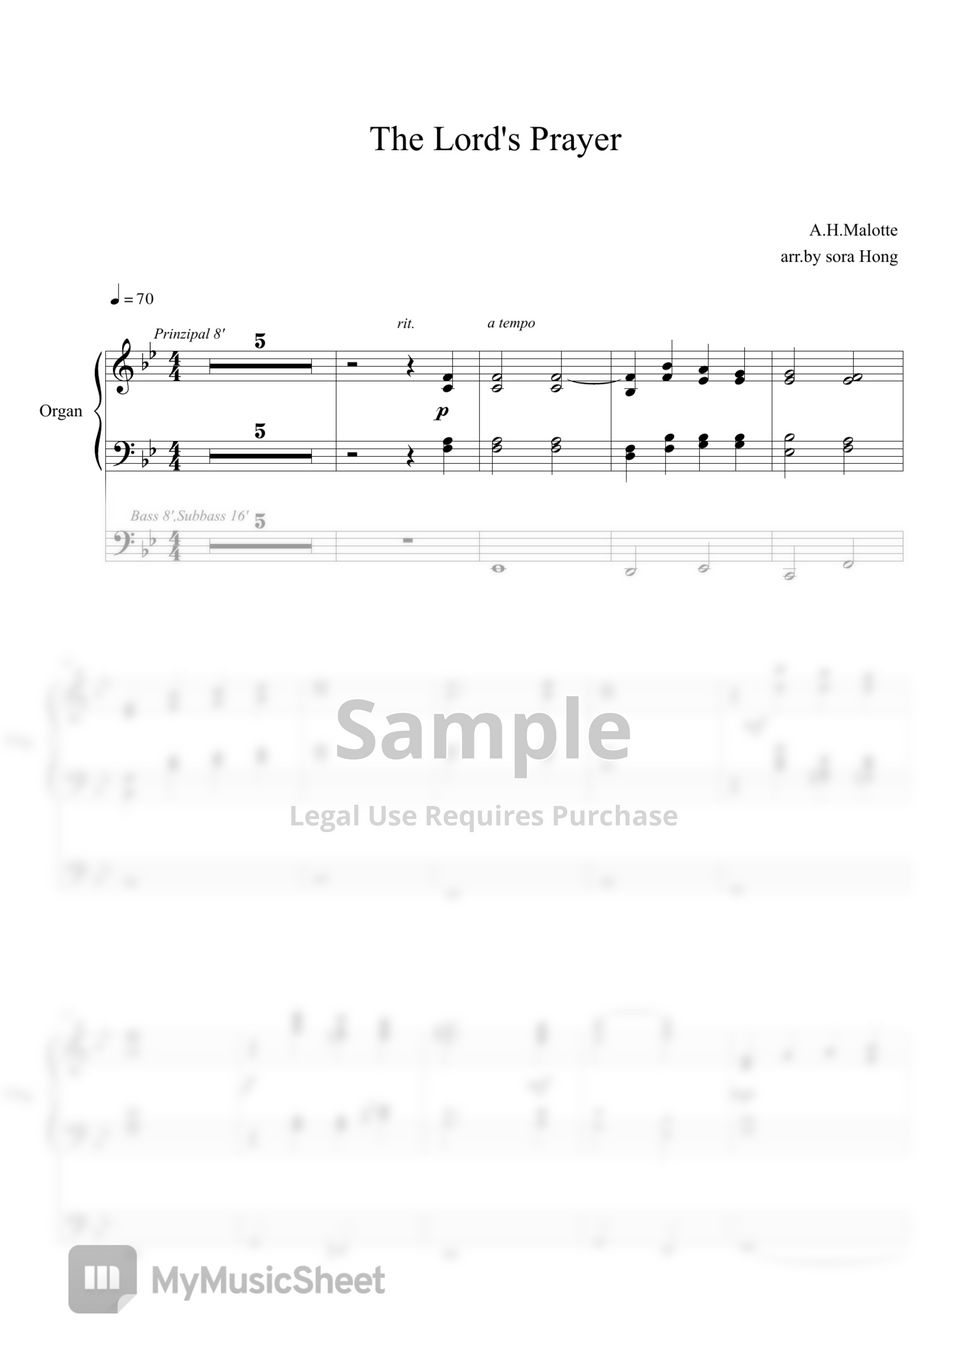 A.H.Malotte - The Lord's Prayer(주기도문) (Choir,Organ,Pno(4부합창,오르간,피아노)) by sora Hong